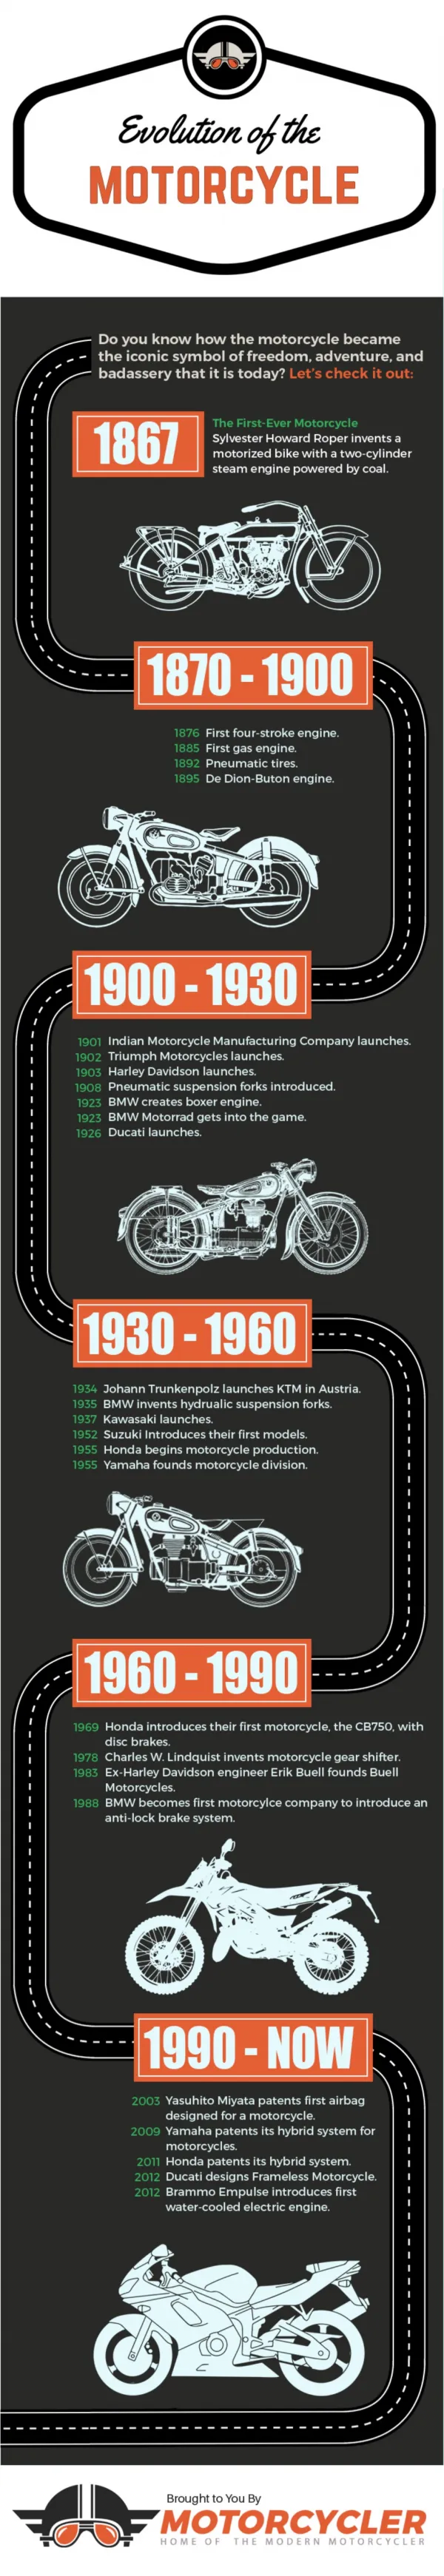 Motorcycle Evolution